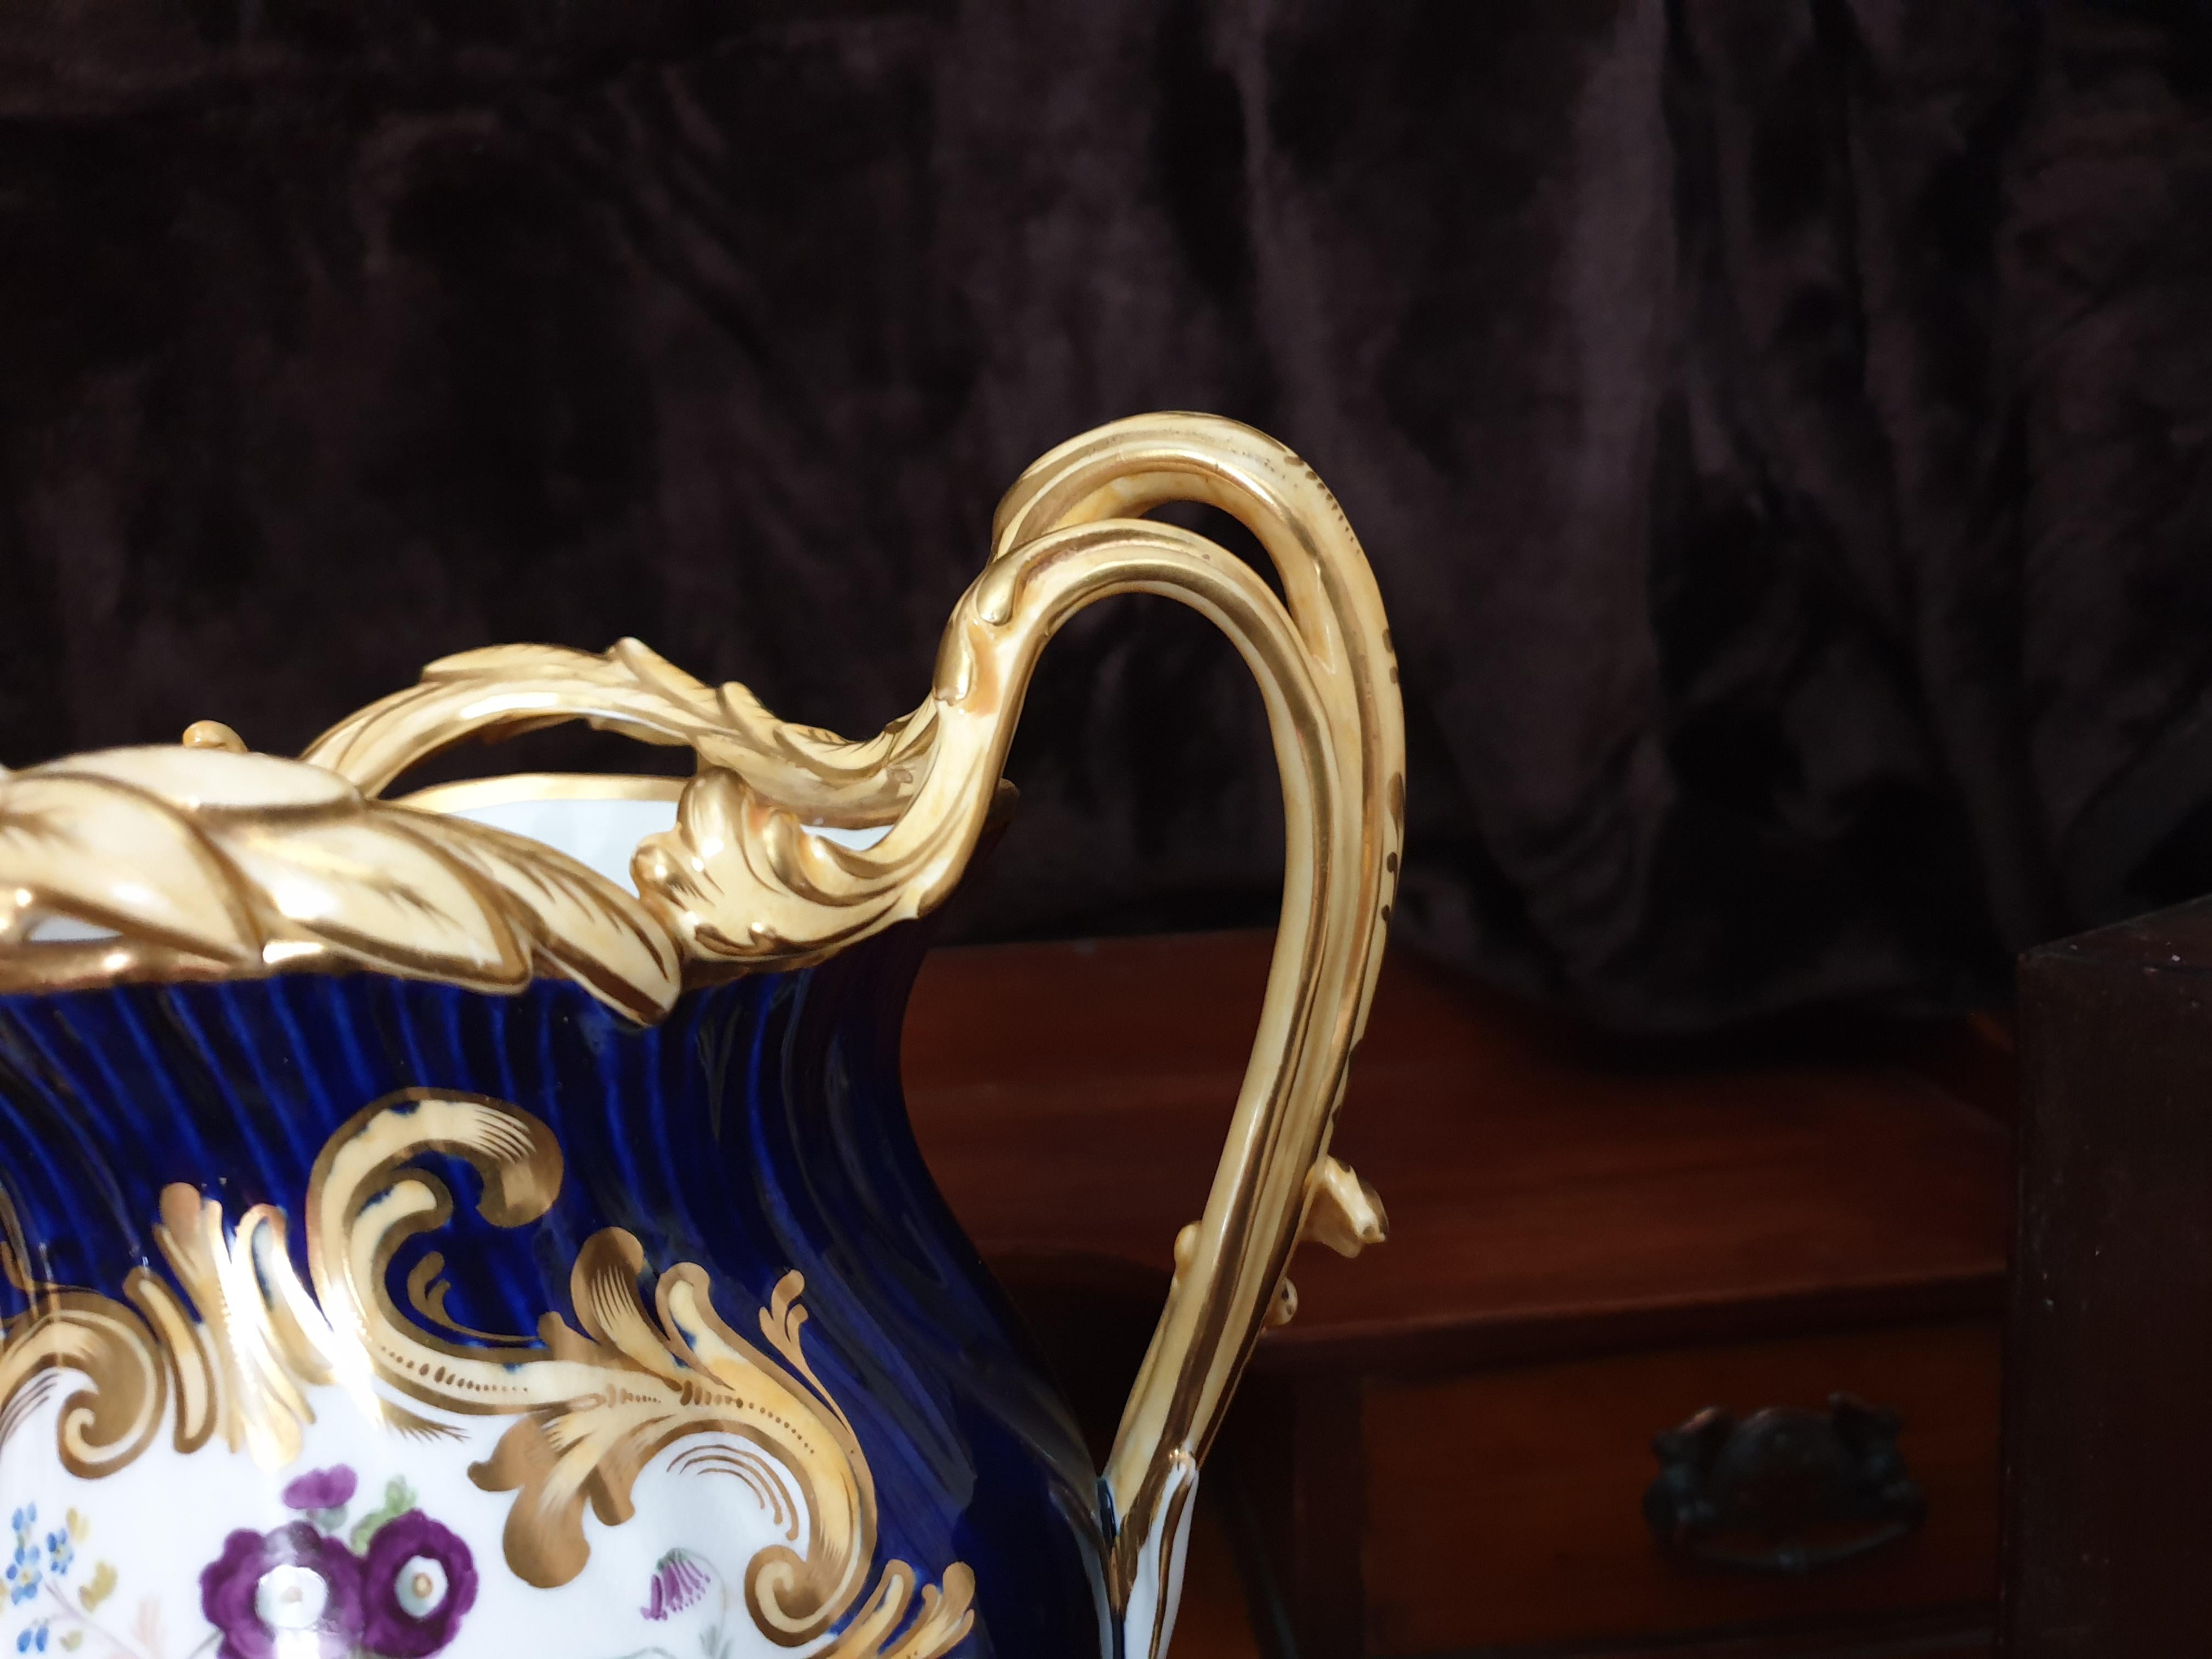 English H & R Daniel Floral Laurels Hand painted 19th Century Decorative Vases For Sale 2